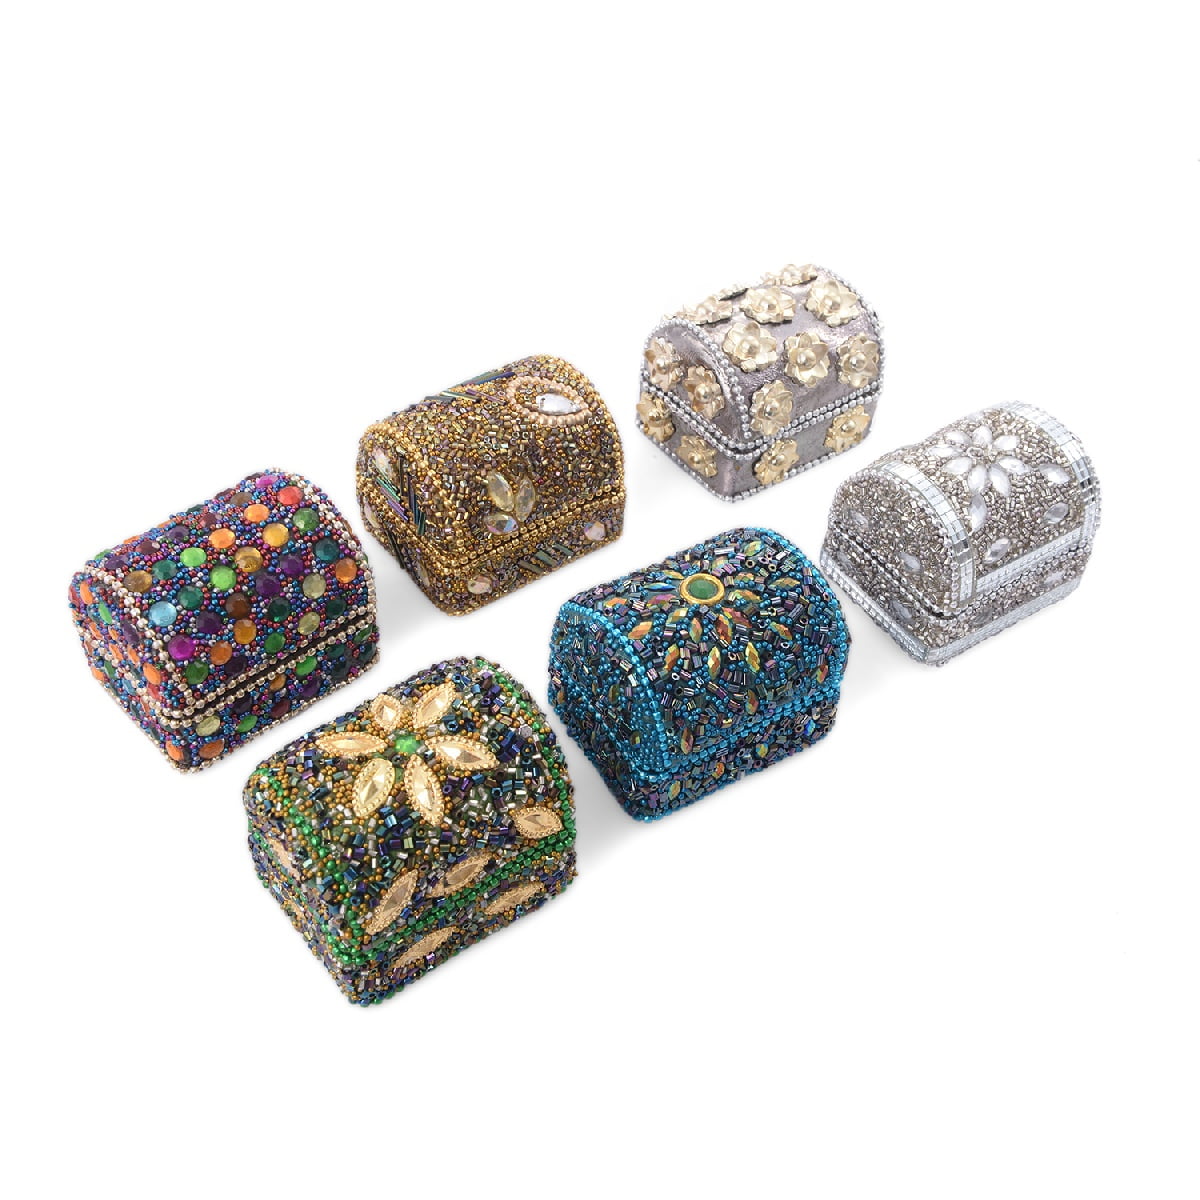 Shop LC Set of Handcrafted Mini Multi Color Bead Treasure Chest Organizer  Box Storage Gifts